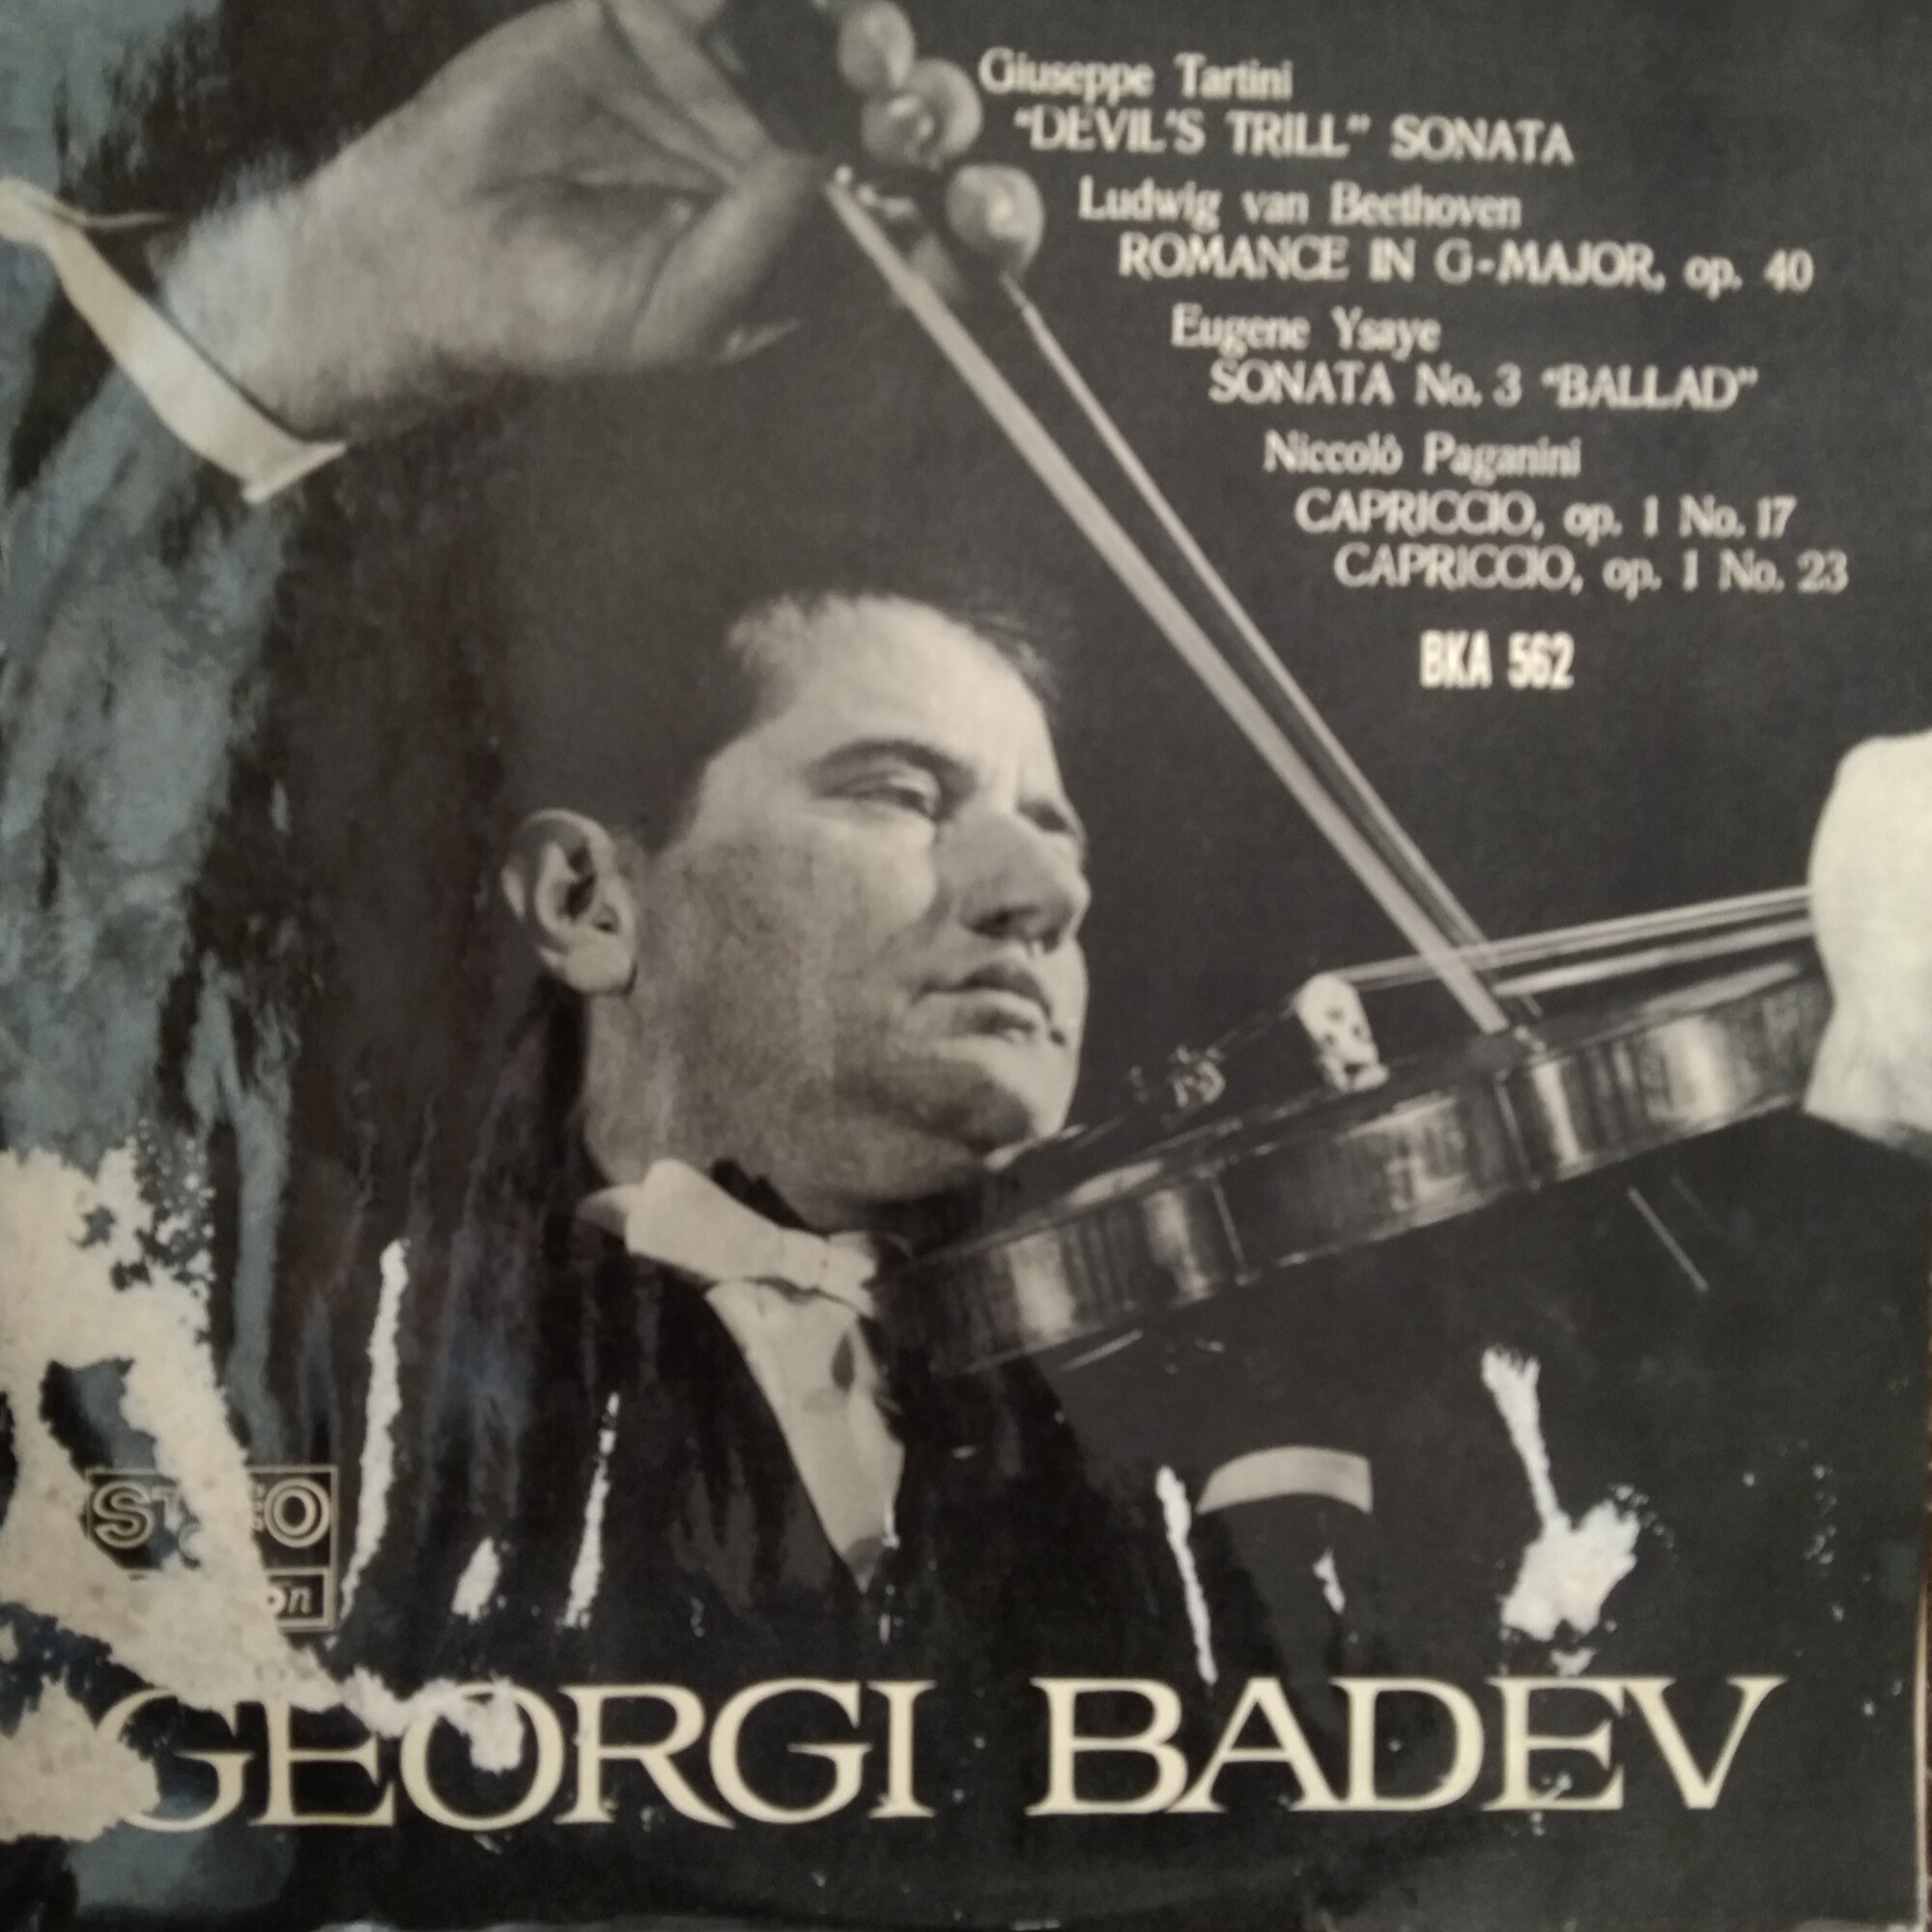 Георги БАДЕВ - цигулка